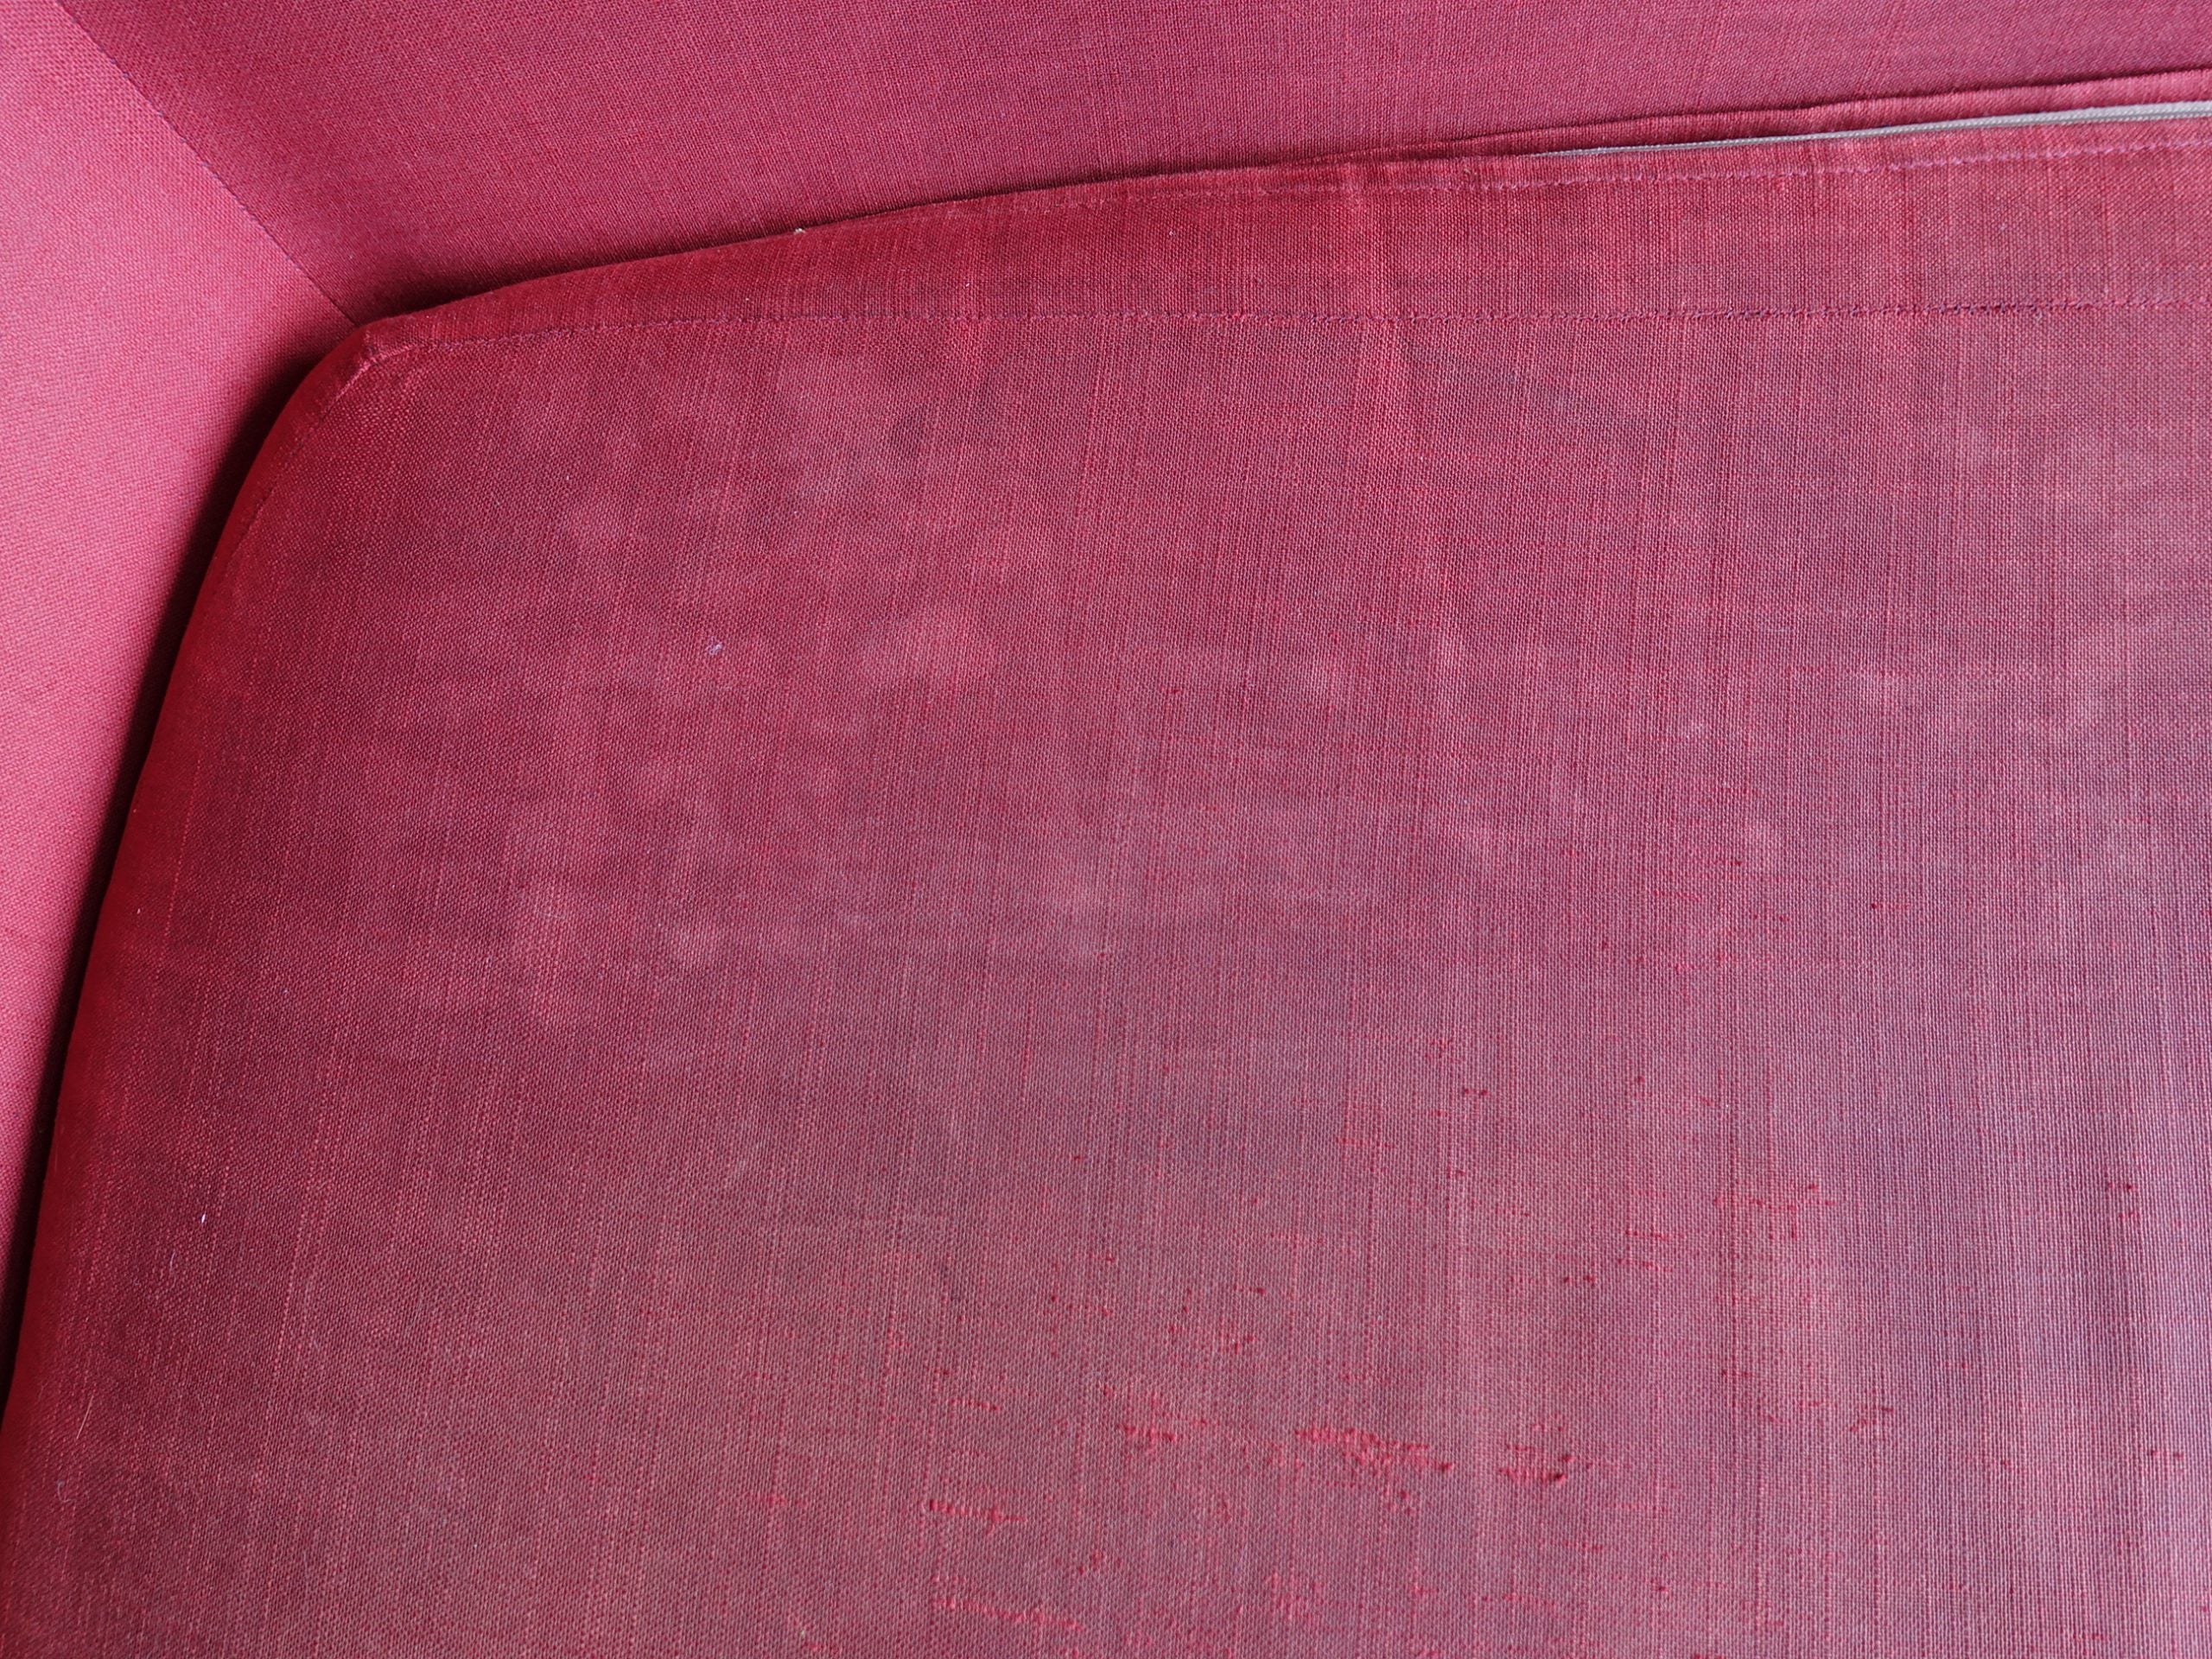 Hoover SteamJet Handy clean sofa